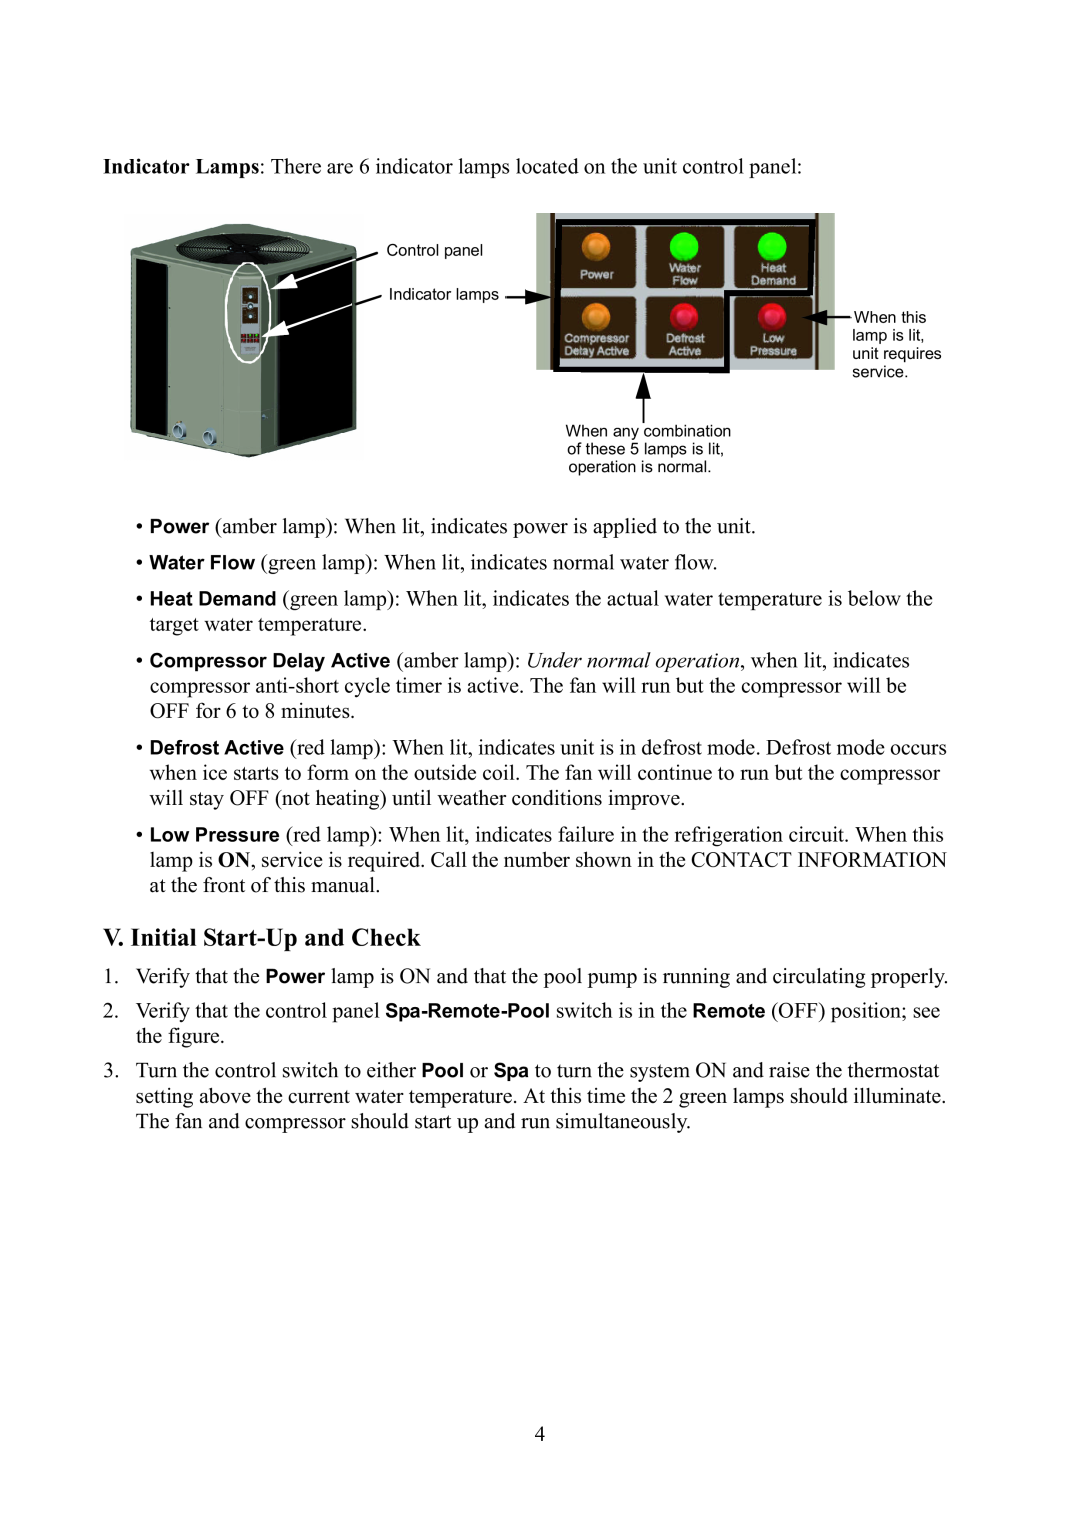 Raypak RHP 33 installation manual V.Initial Start-Upand Check 